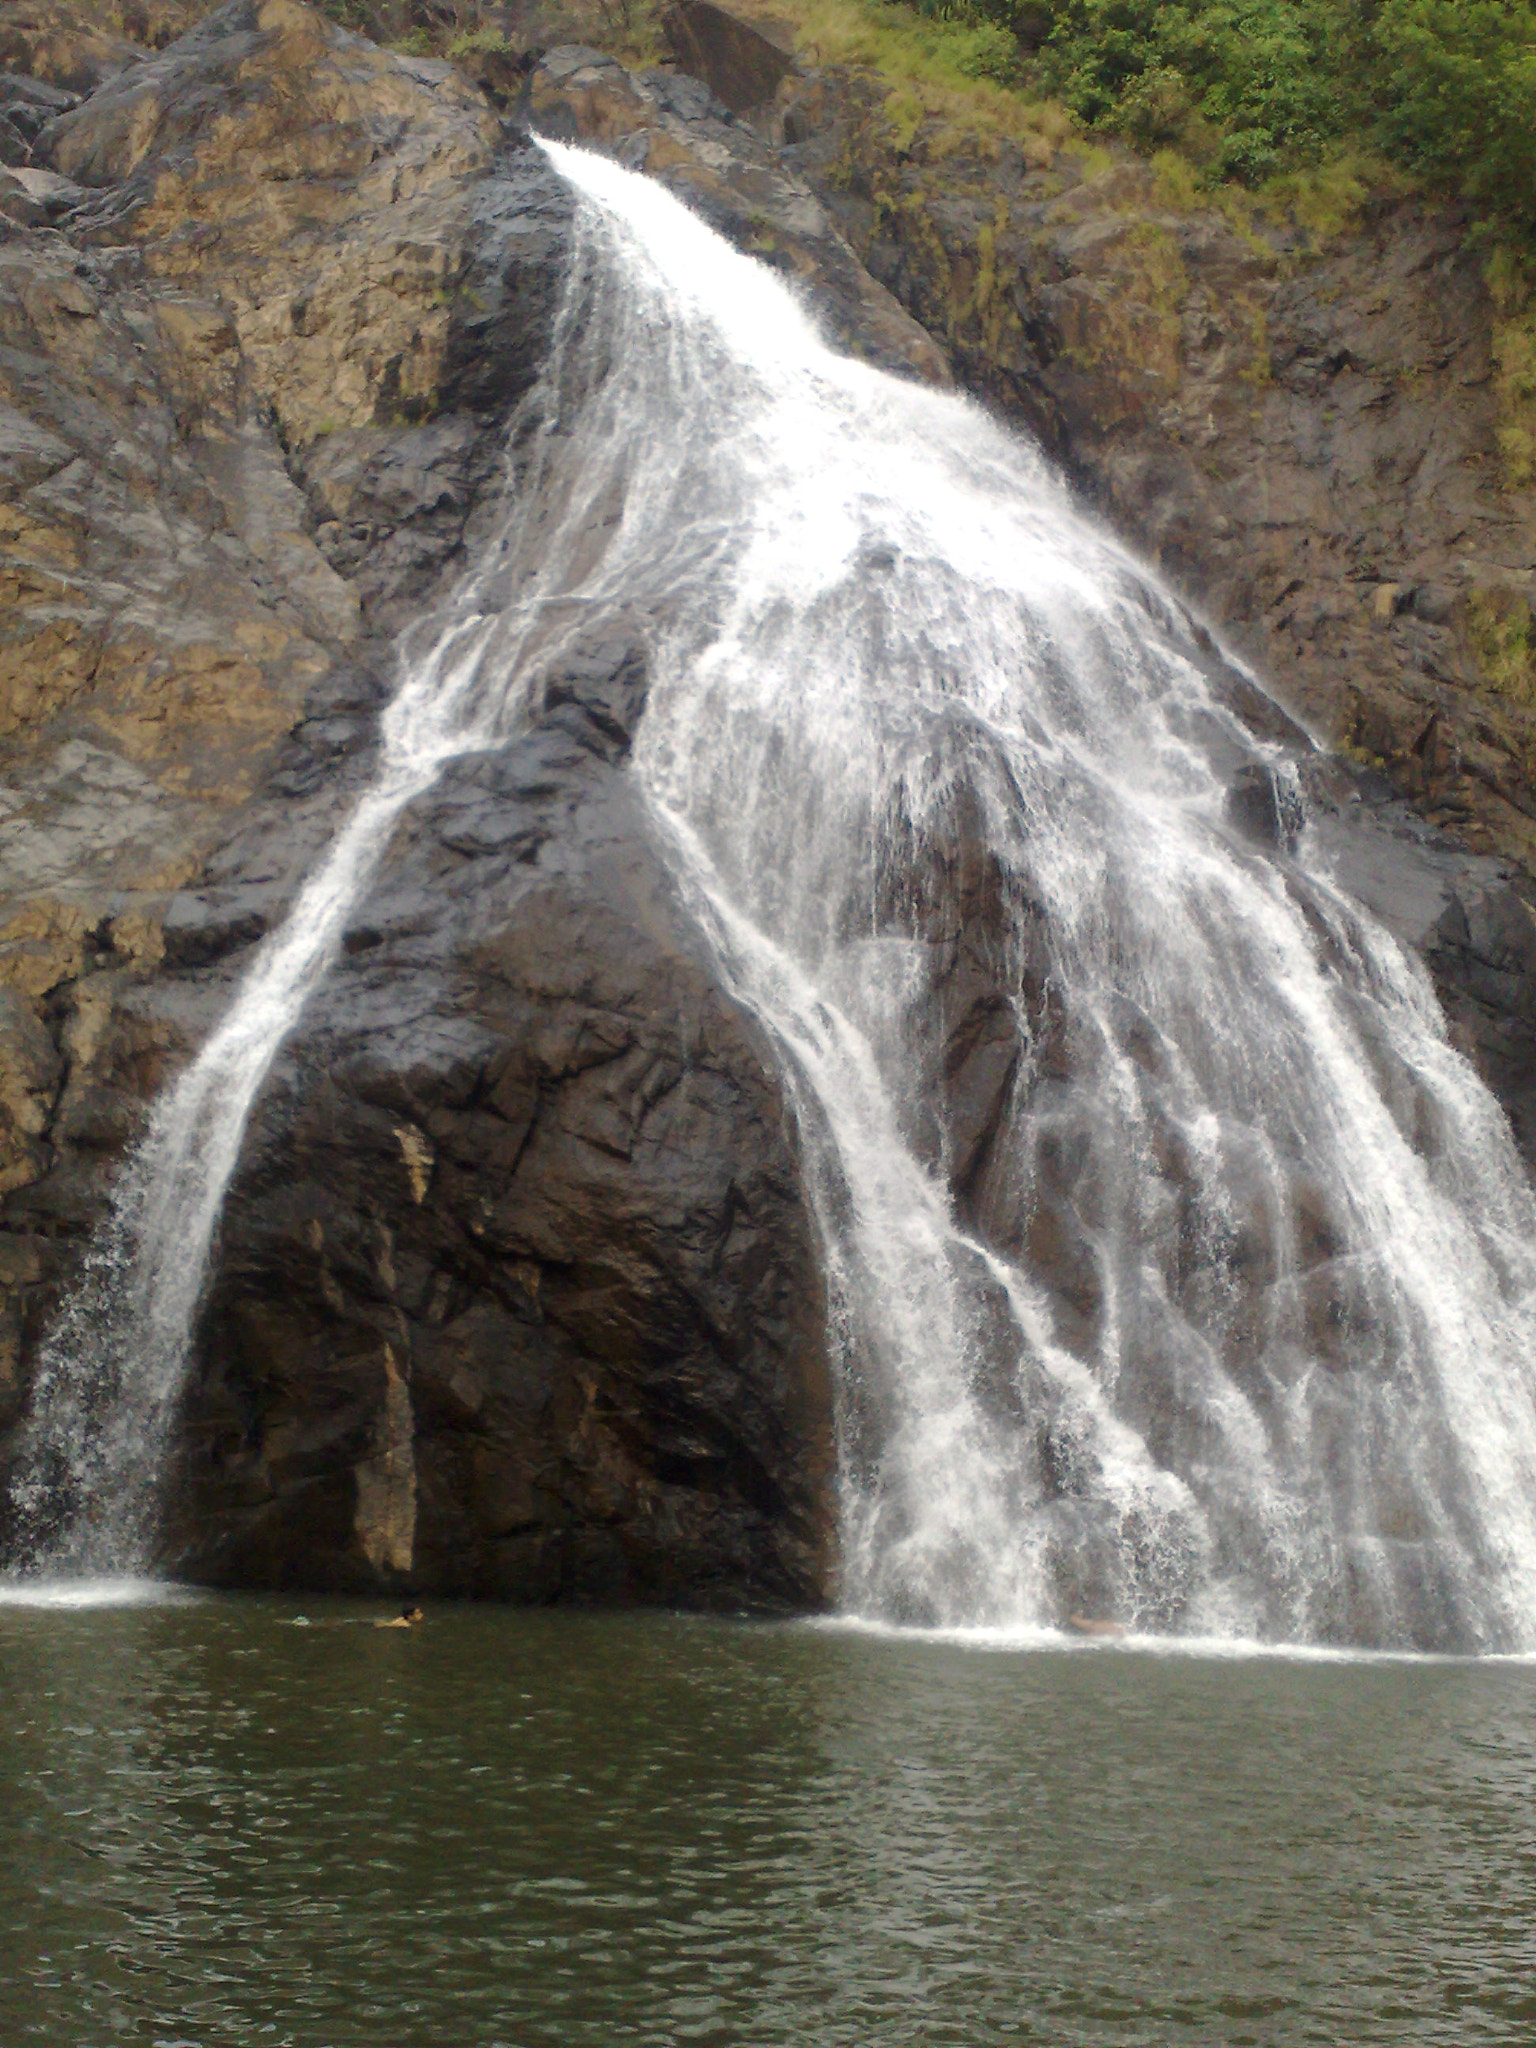 Nokia N95 8GB sample photo. Doodh sagar waterfall goa, india photography